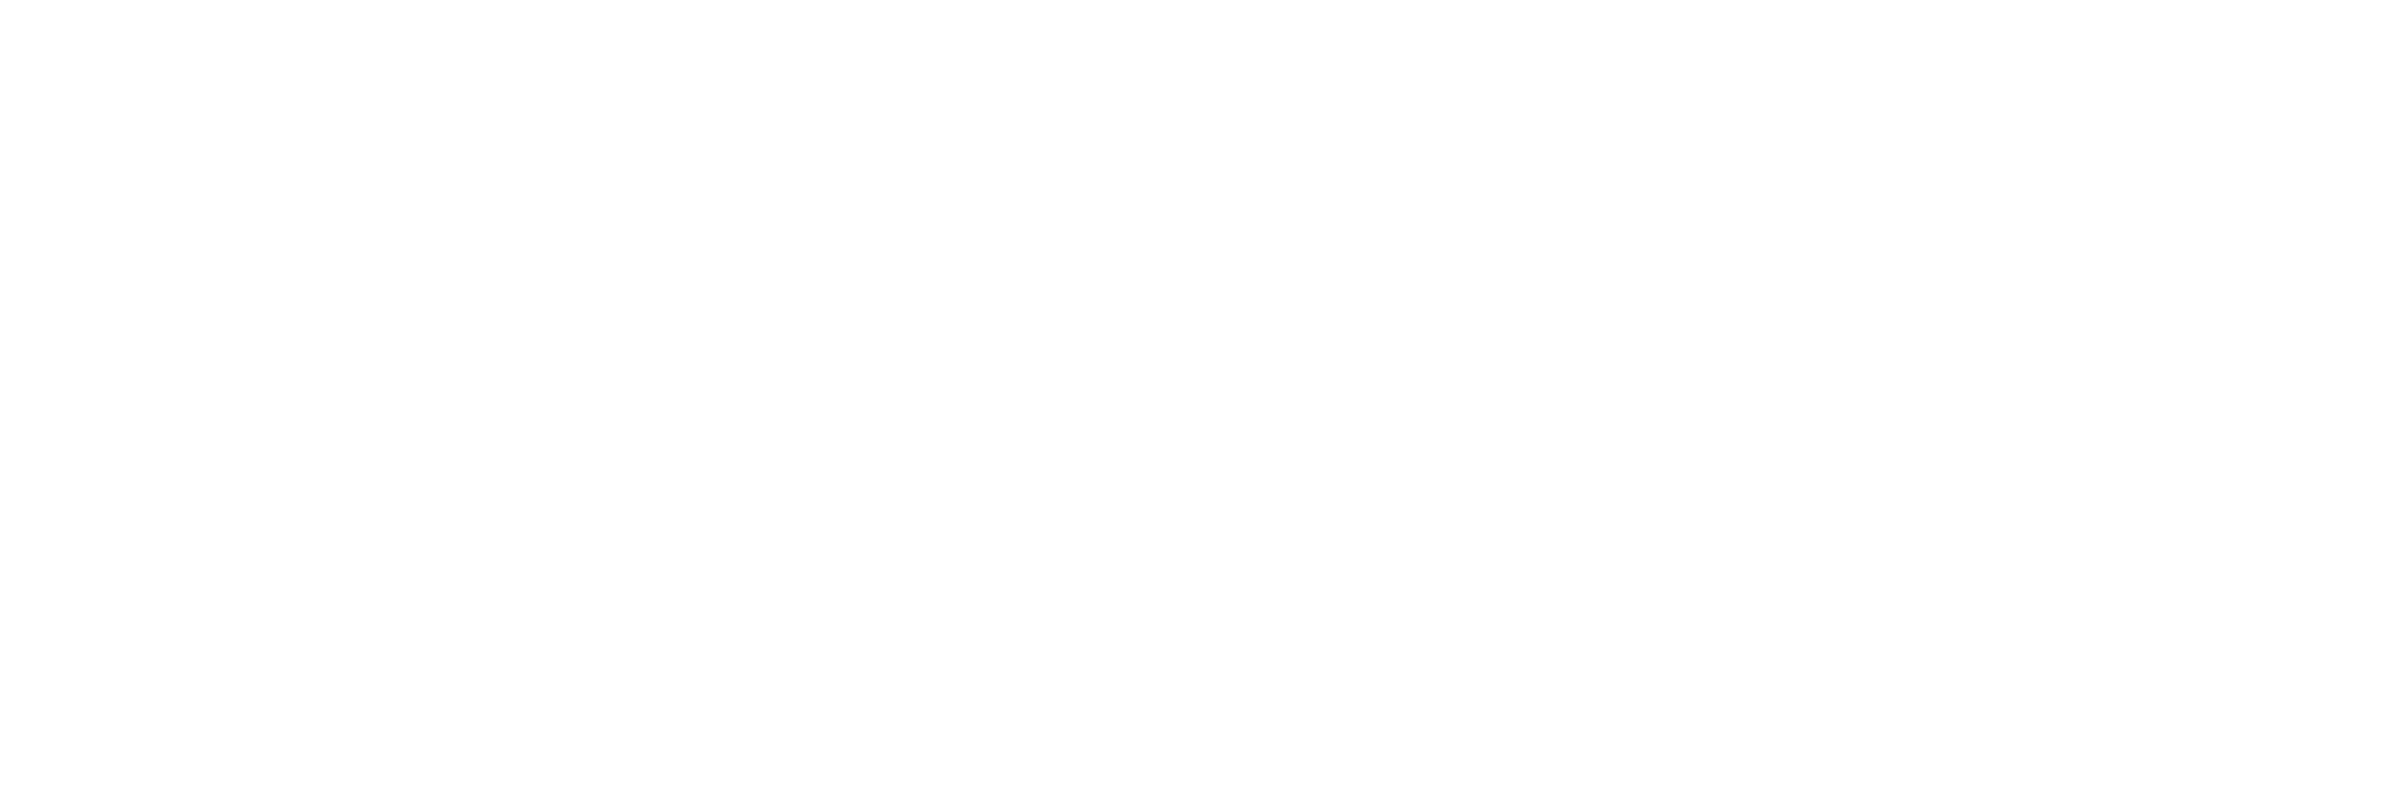 label reads: 200,000+ alumni, one extraordinary community